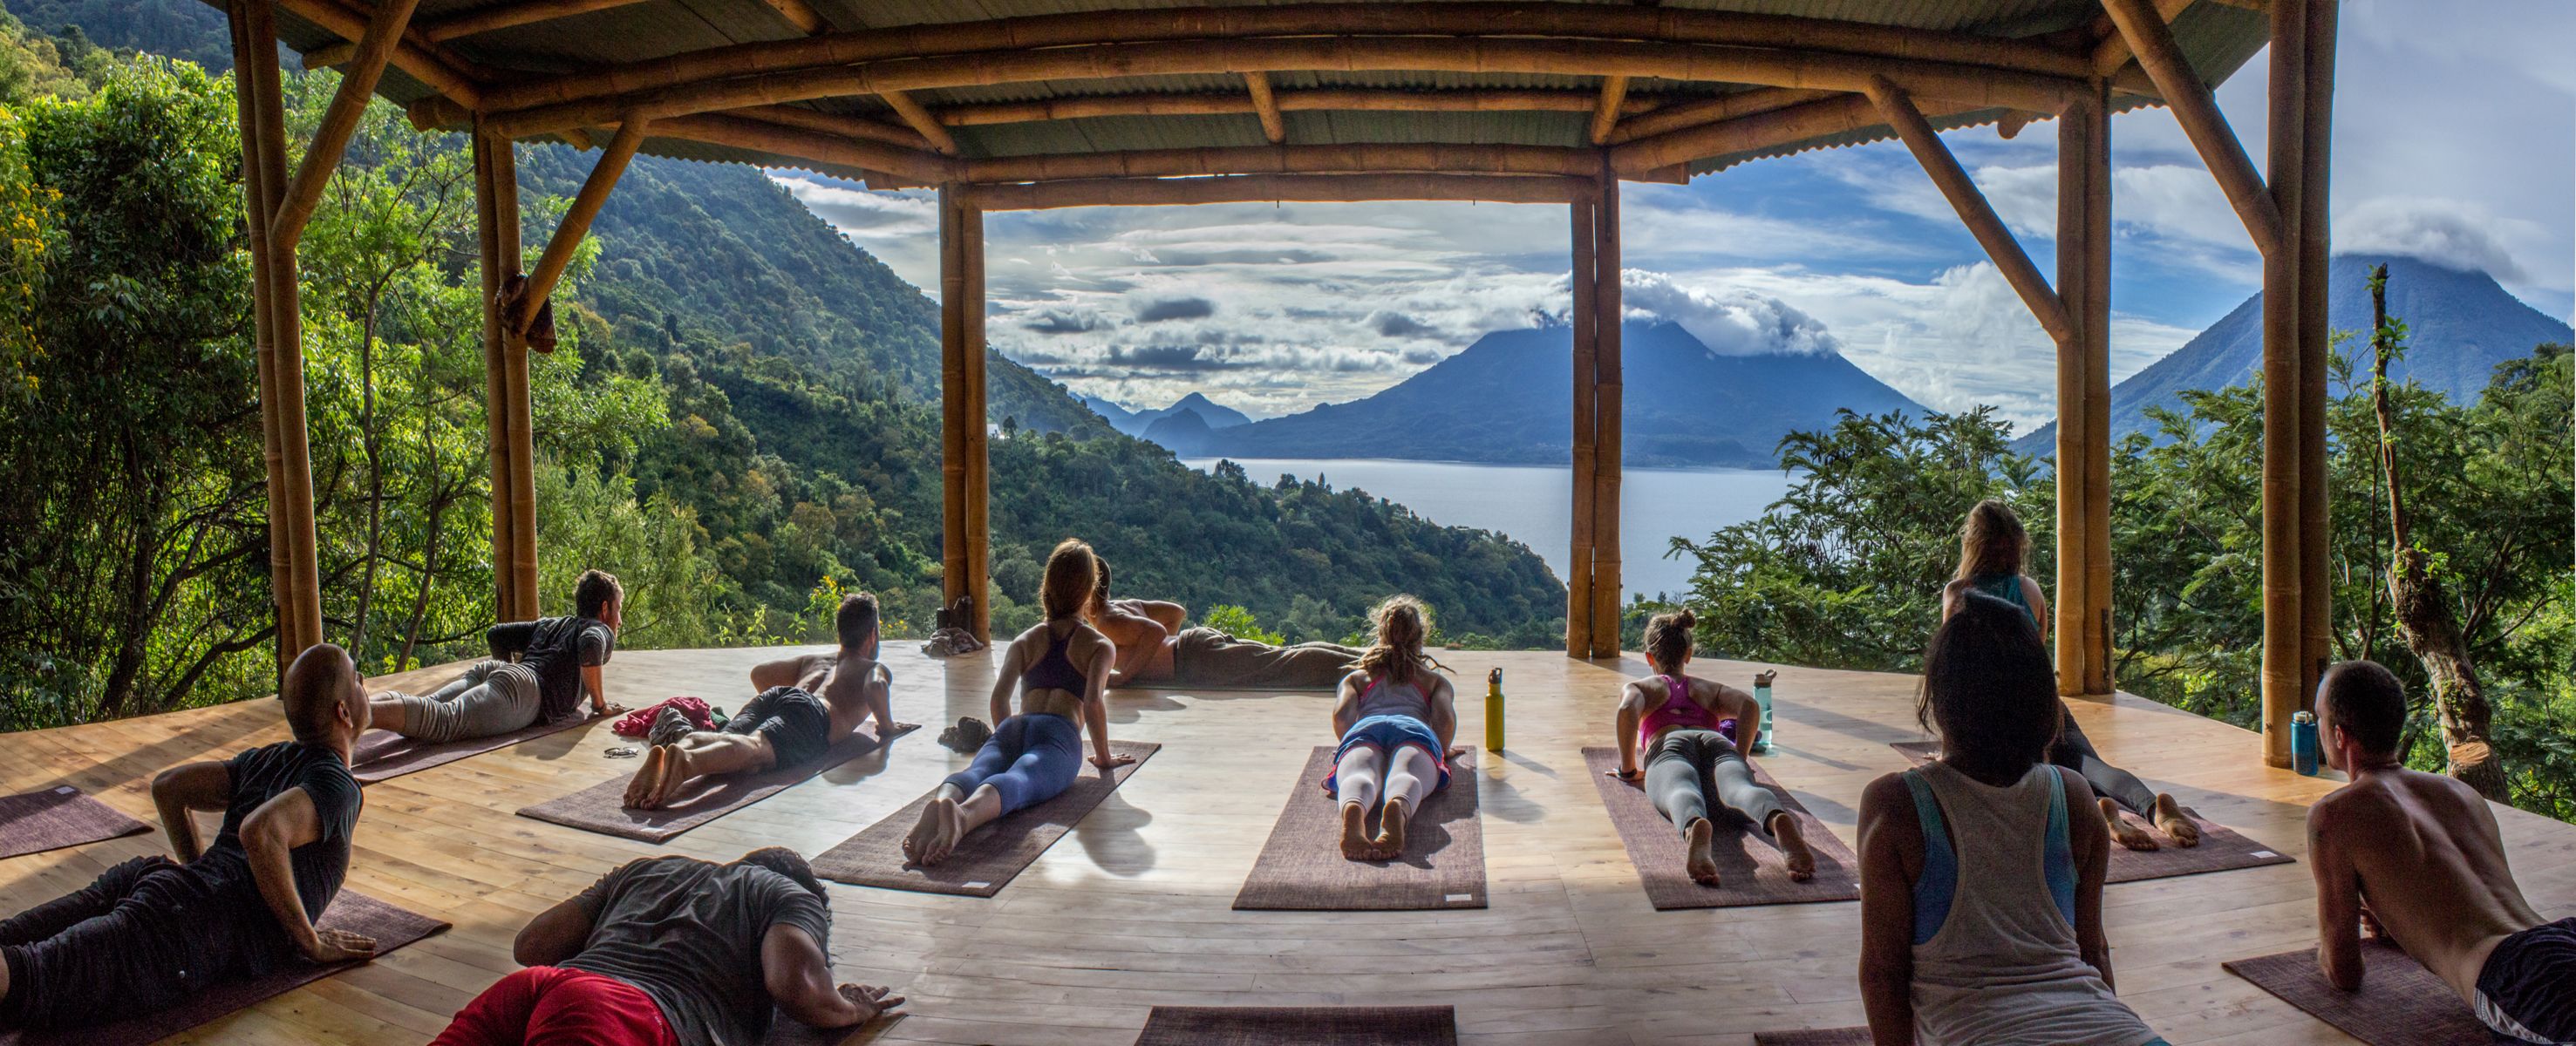 Yoga retreats around the world